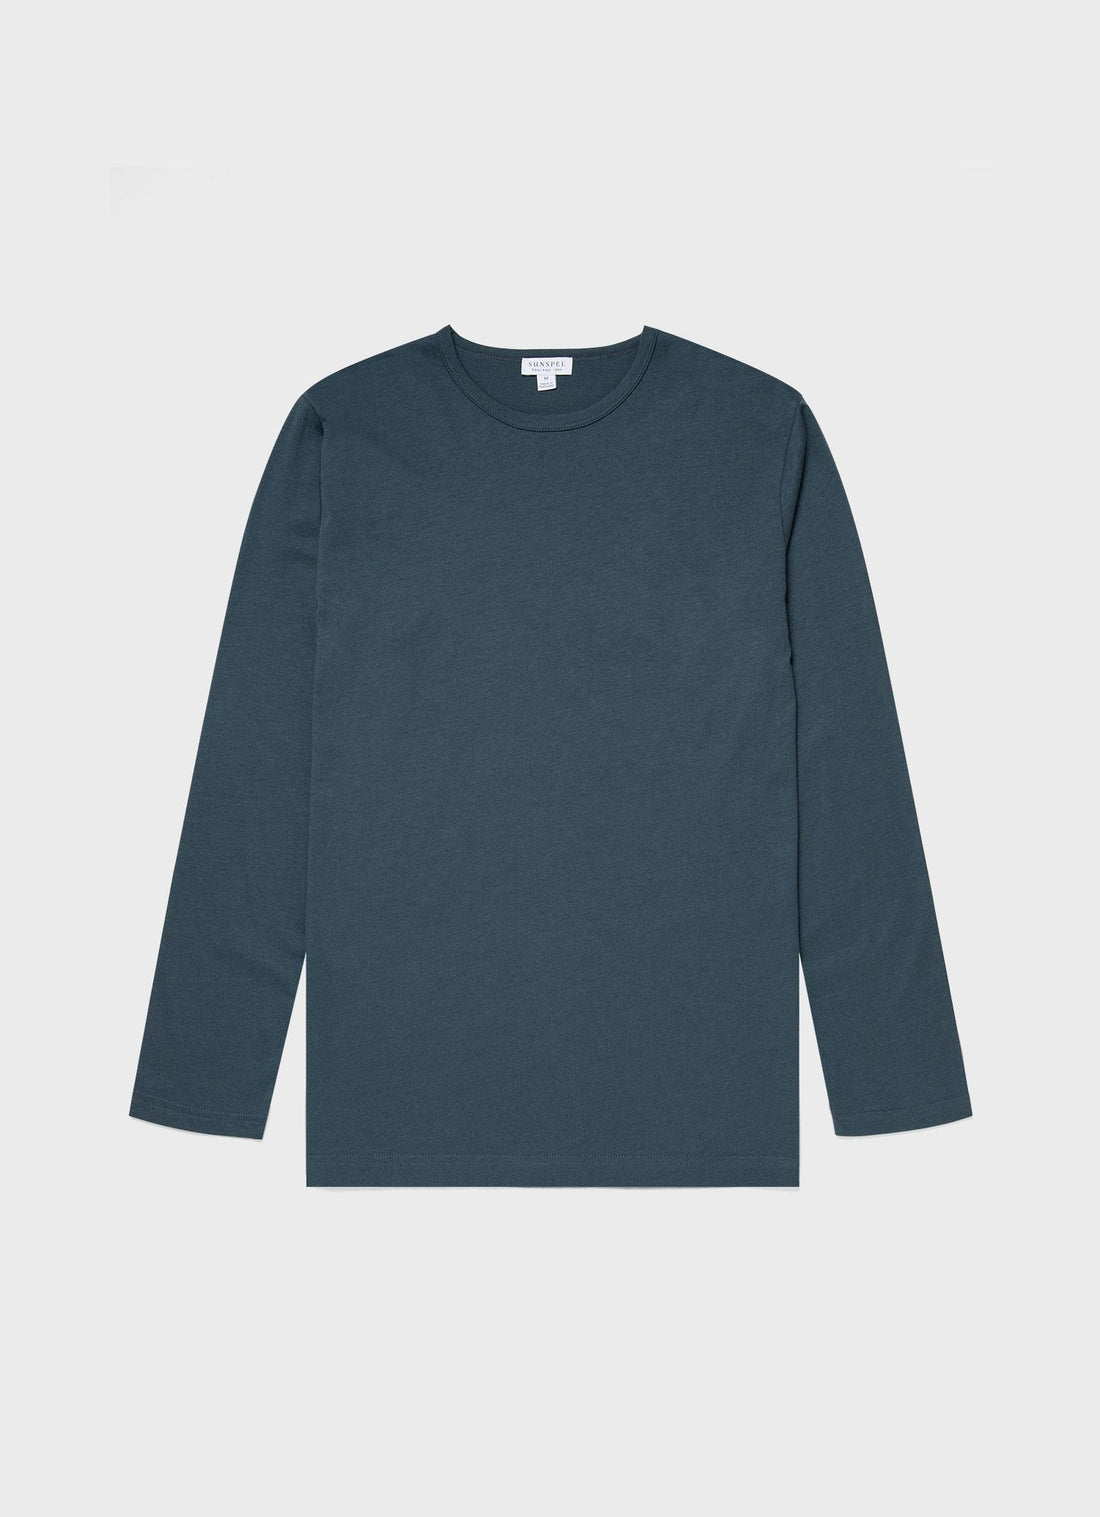 Men's Cotton Modal Lounge Long Sleeve T-shirt in Dark Petrol